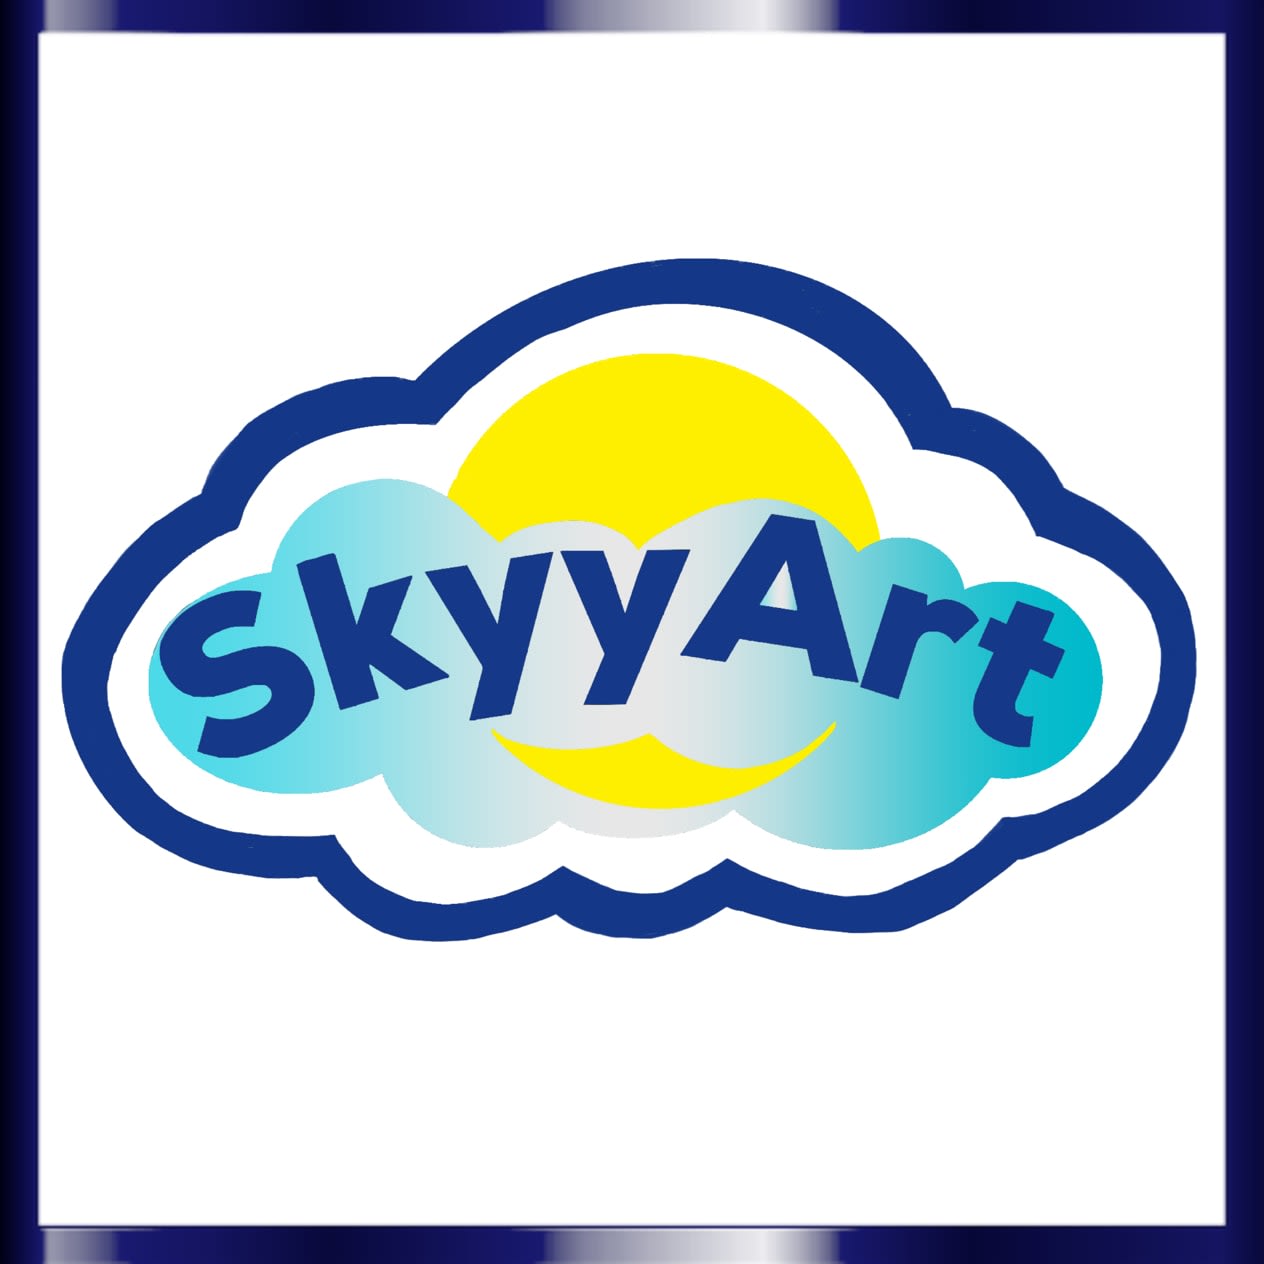 SkyyArt